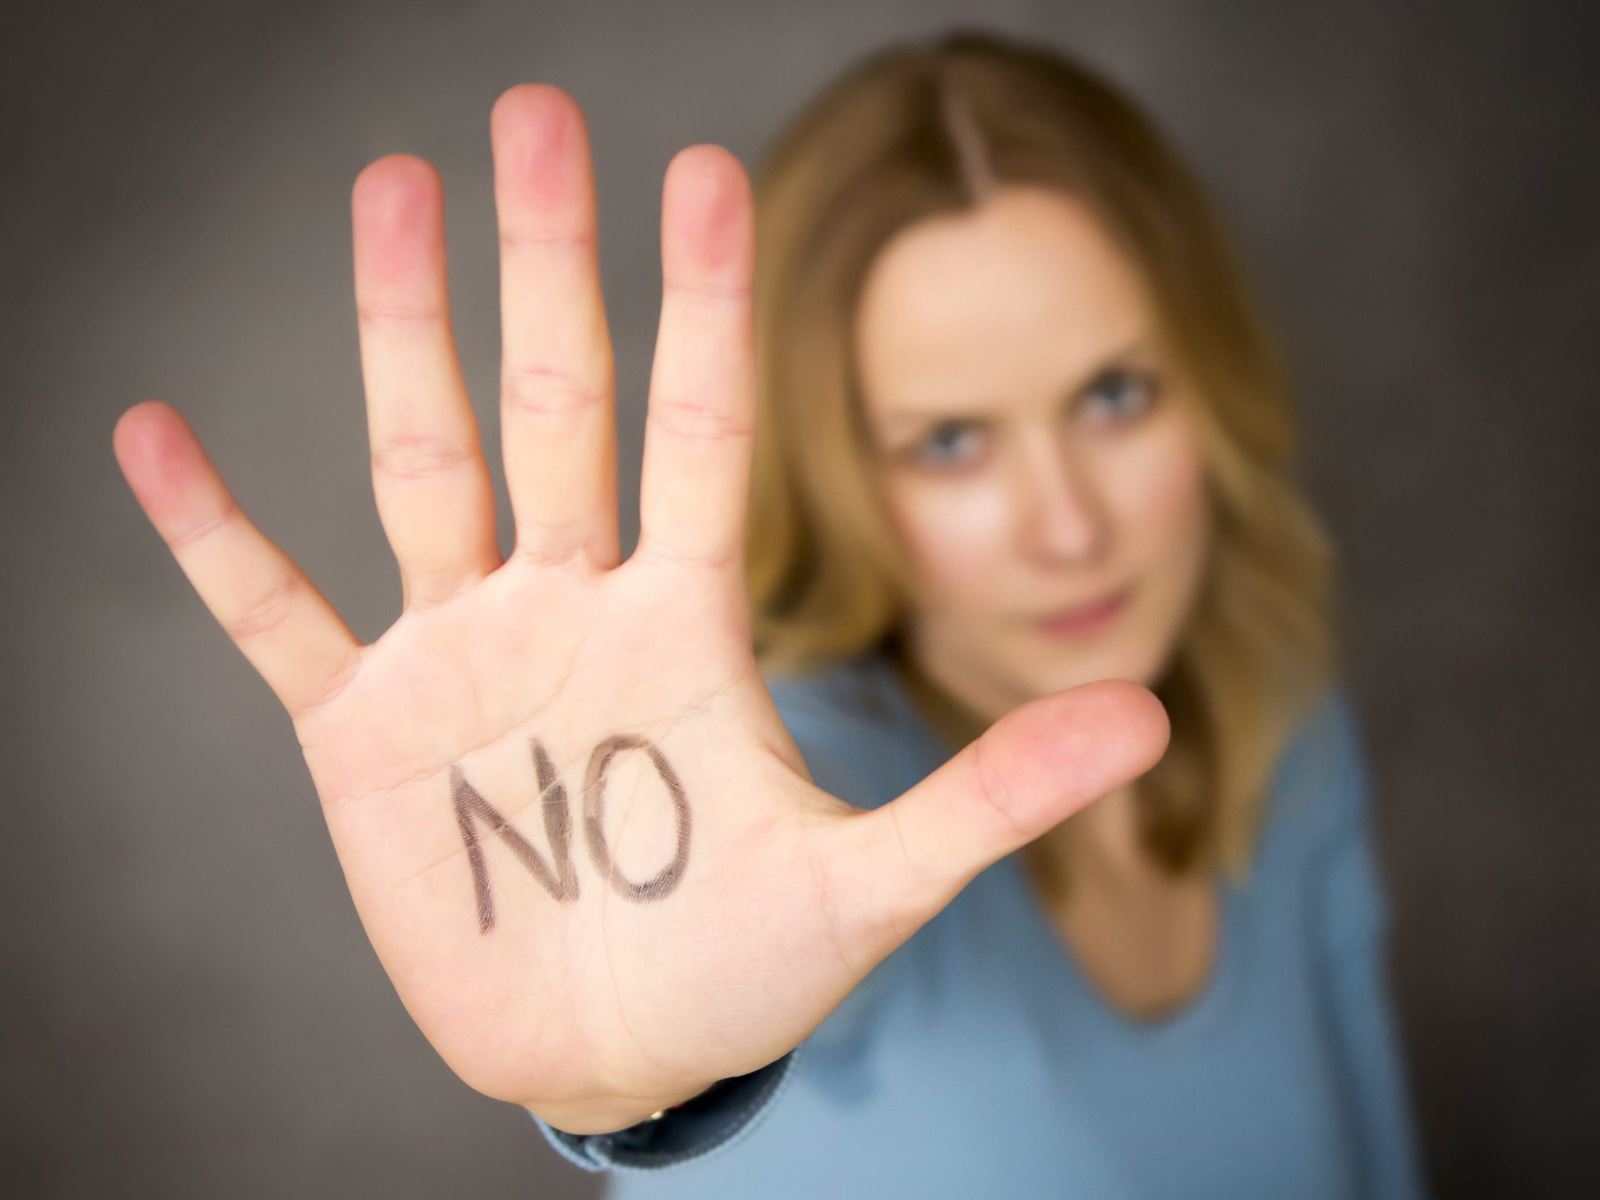 Know how to say “No” reasonably